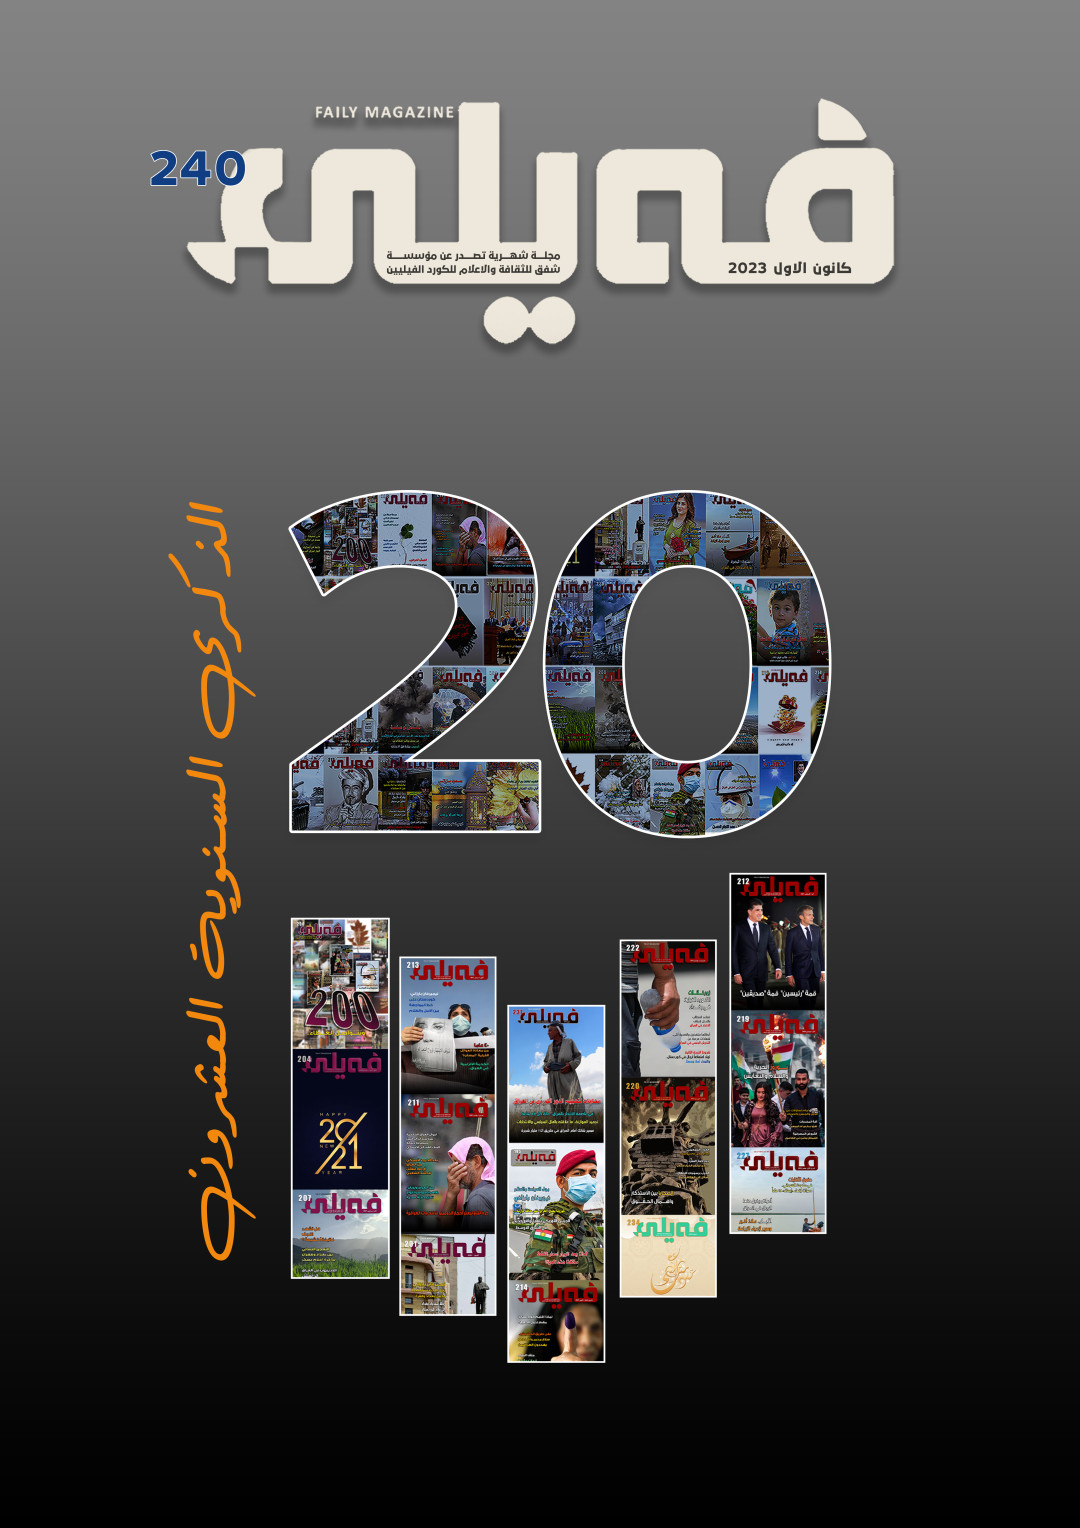 Faili Magazine 240th issue